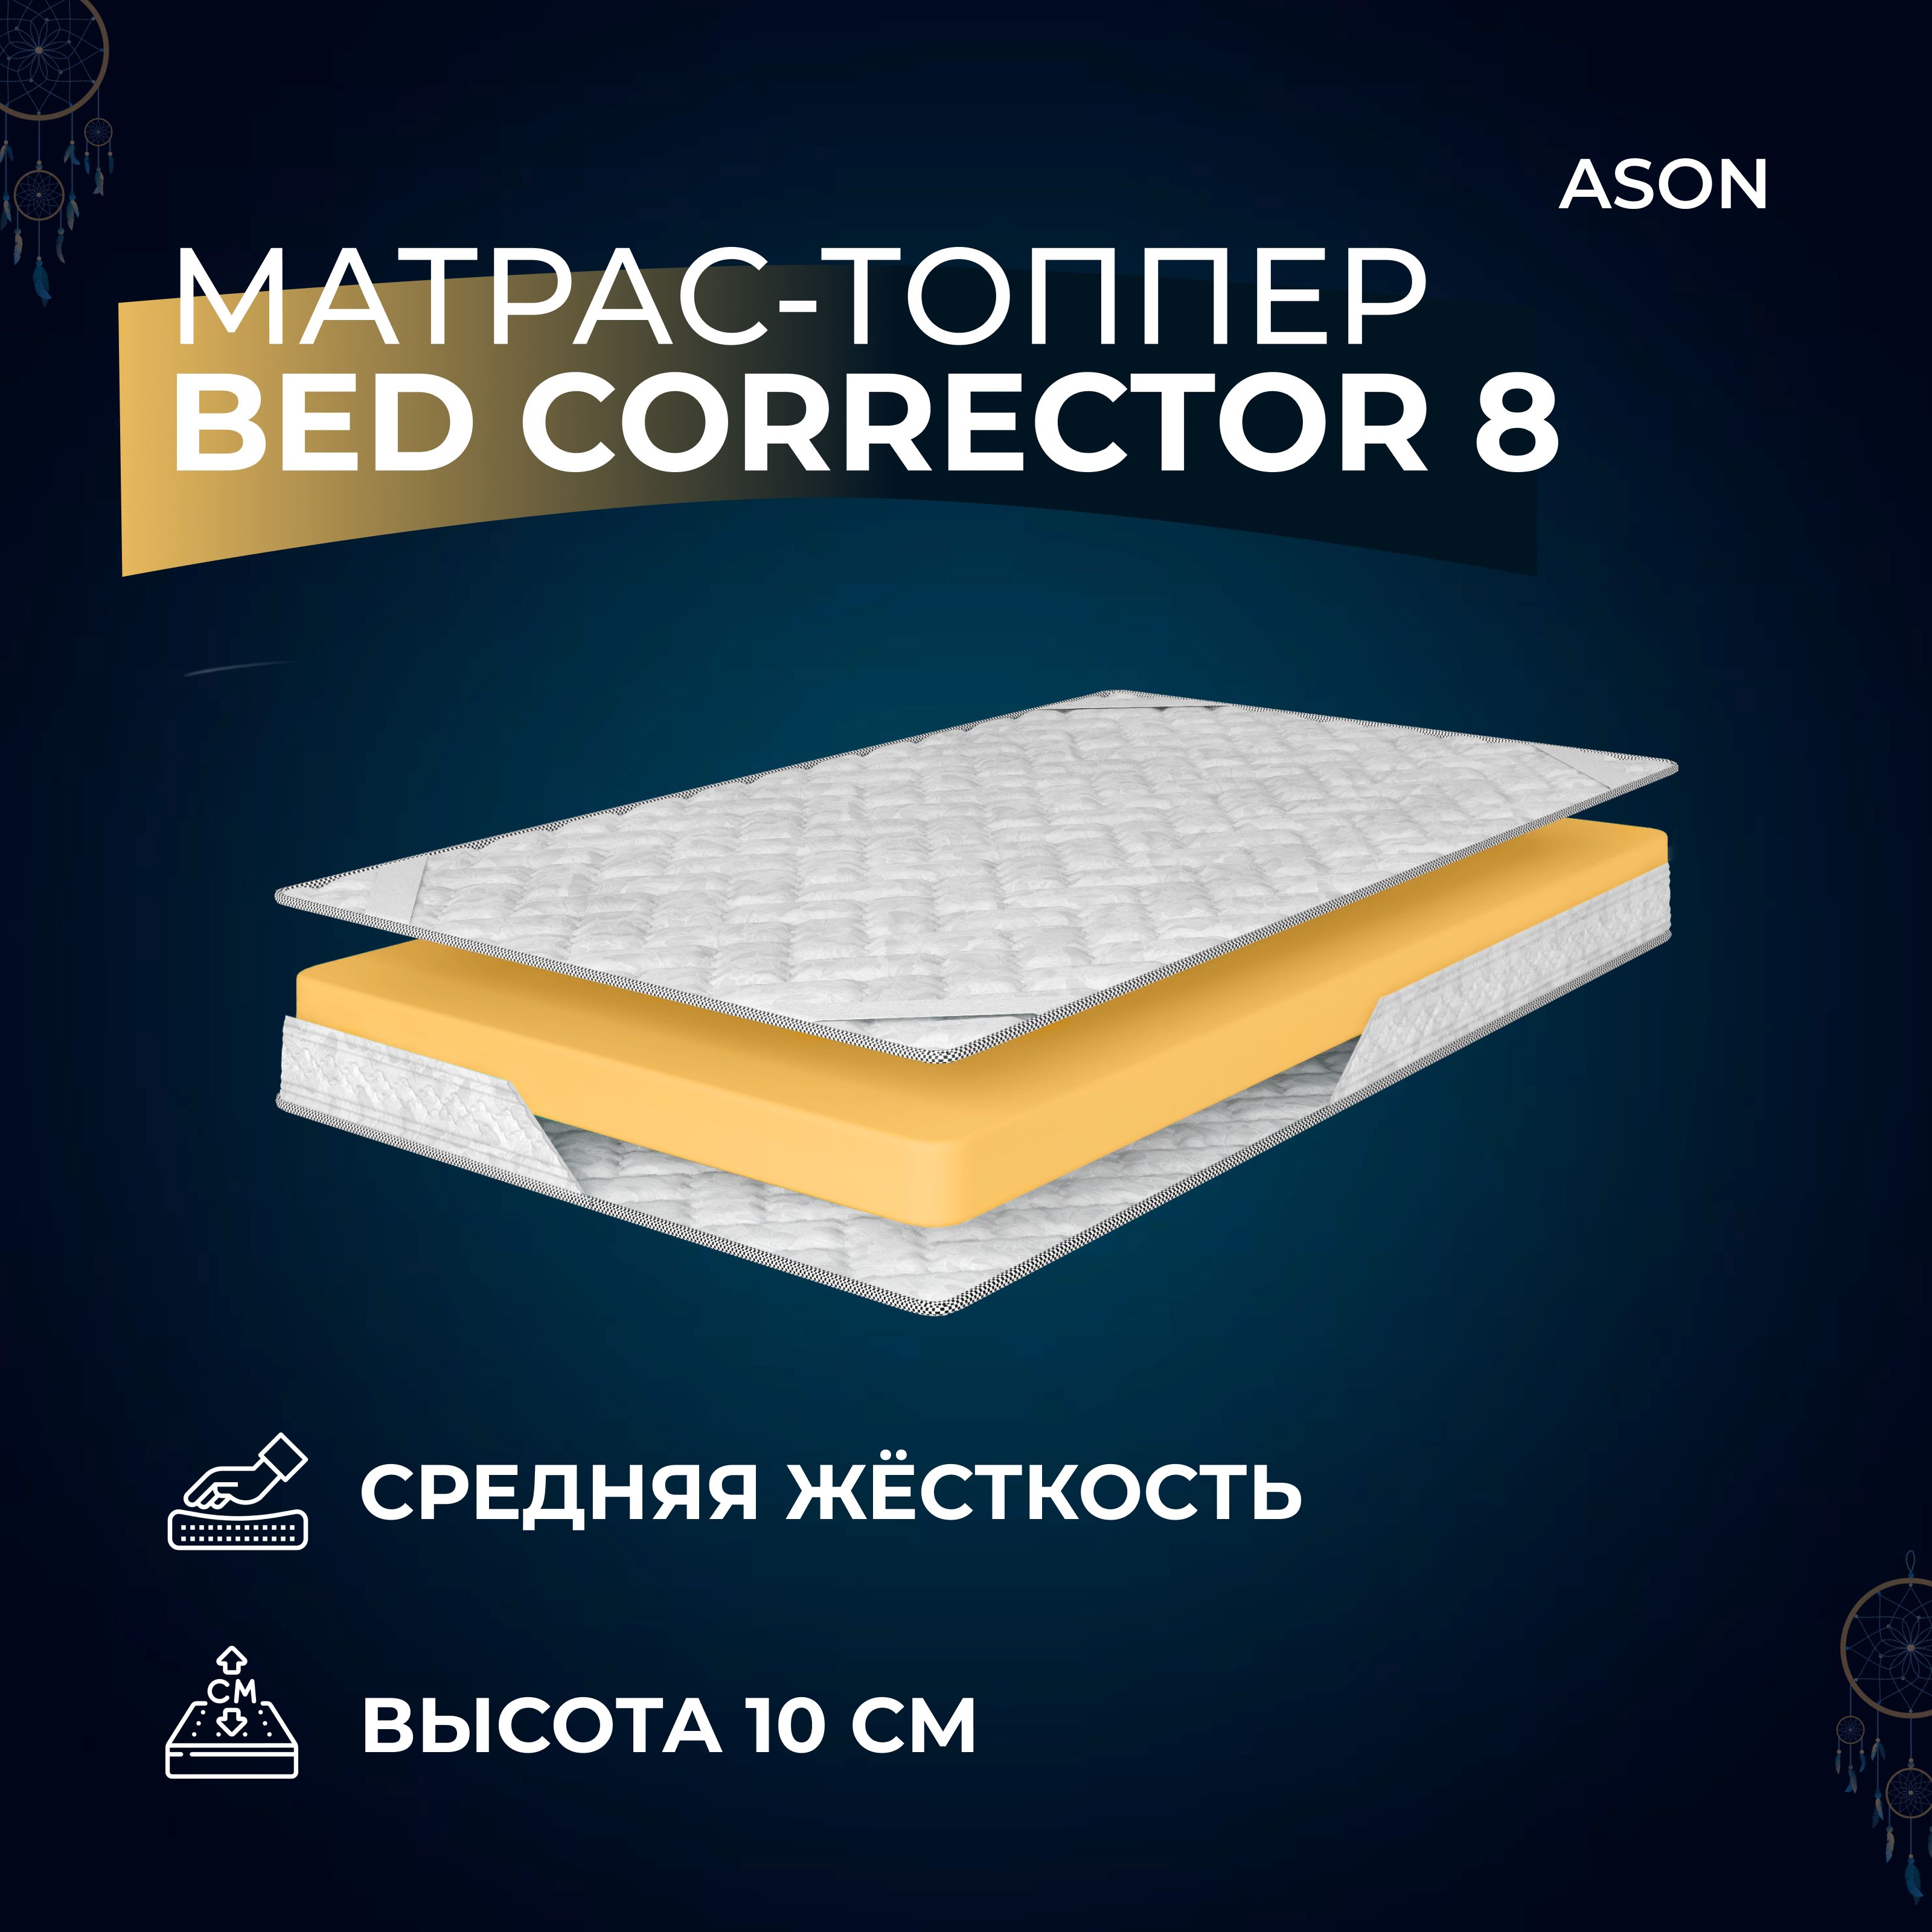 Матрас-топпер 180х195 Ason, Bed corrector 8